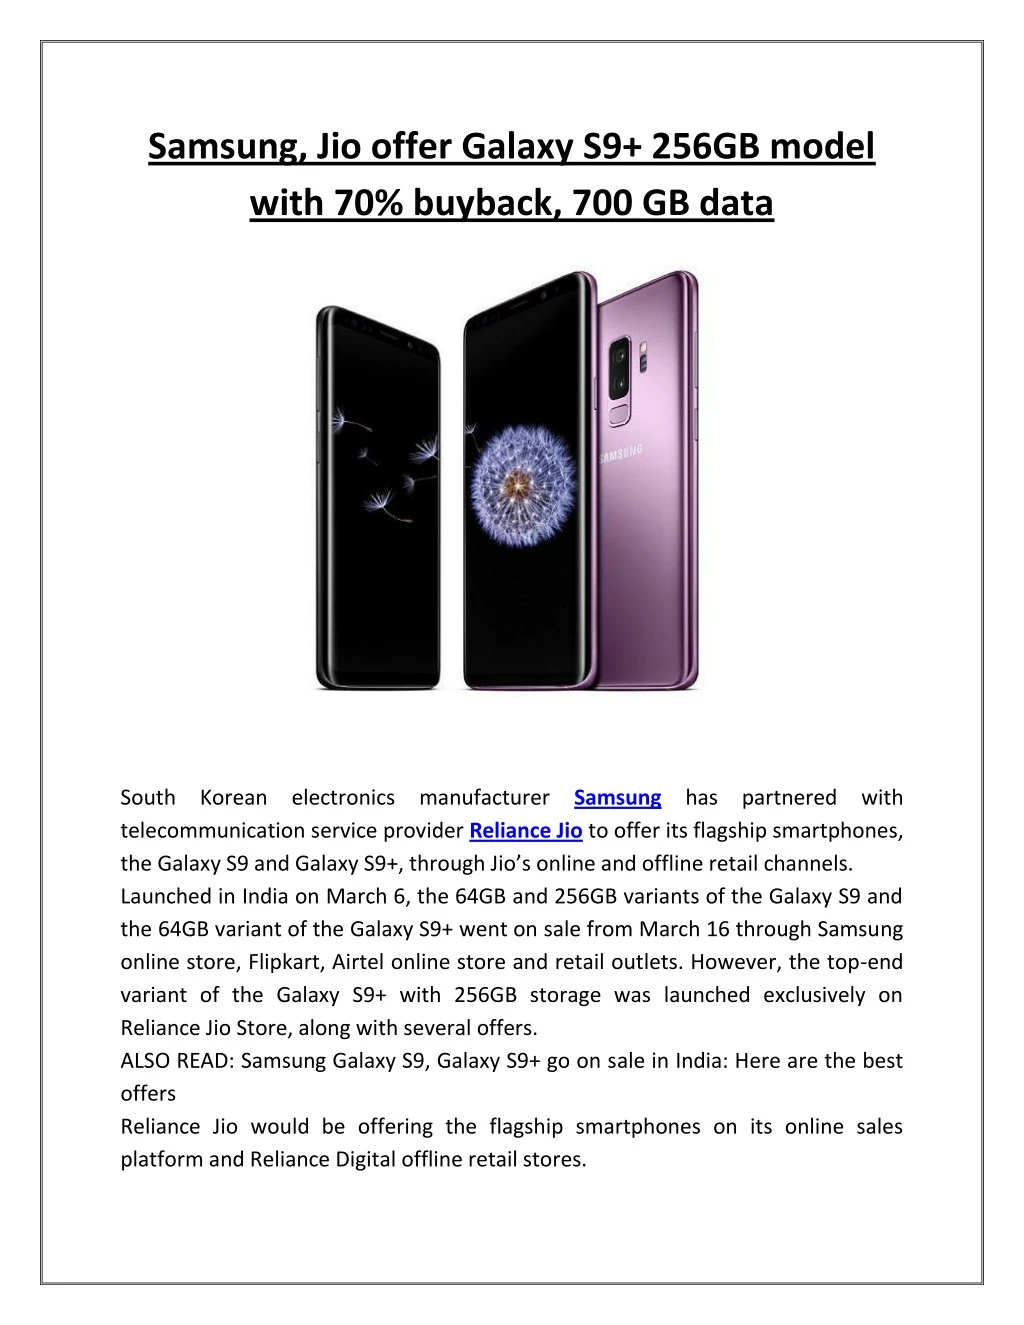 samsung jio offer galaxy s9 256gb model with